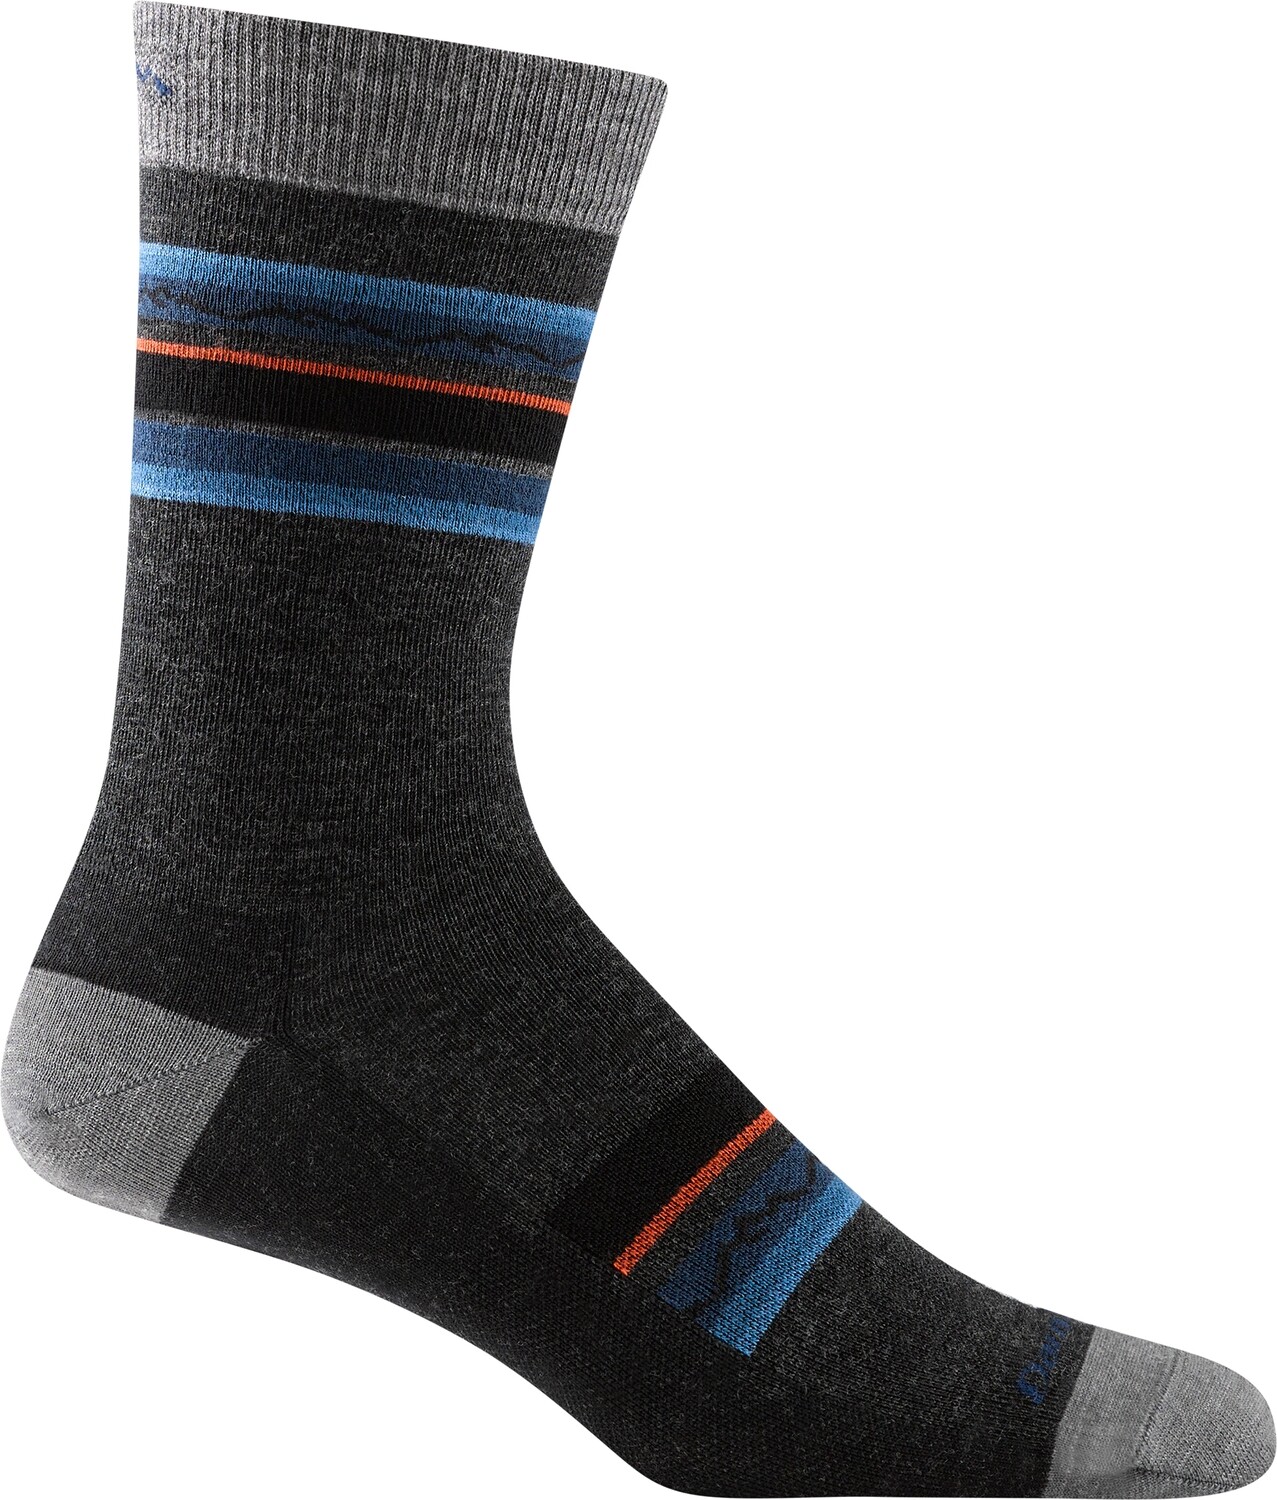 Men's/Unisex 6009 Whetstone Lightweight Lifestyle Sock